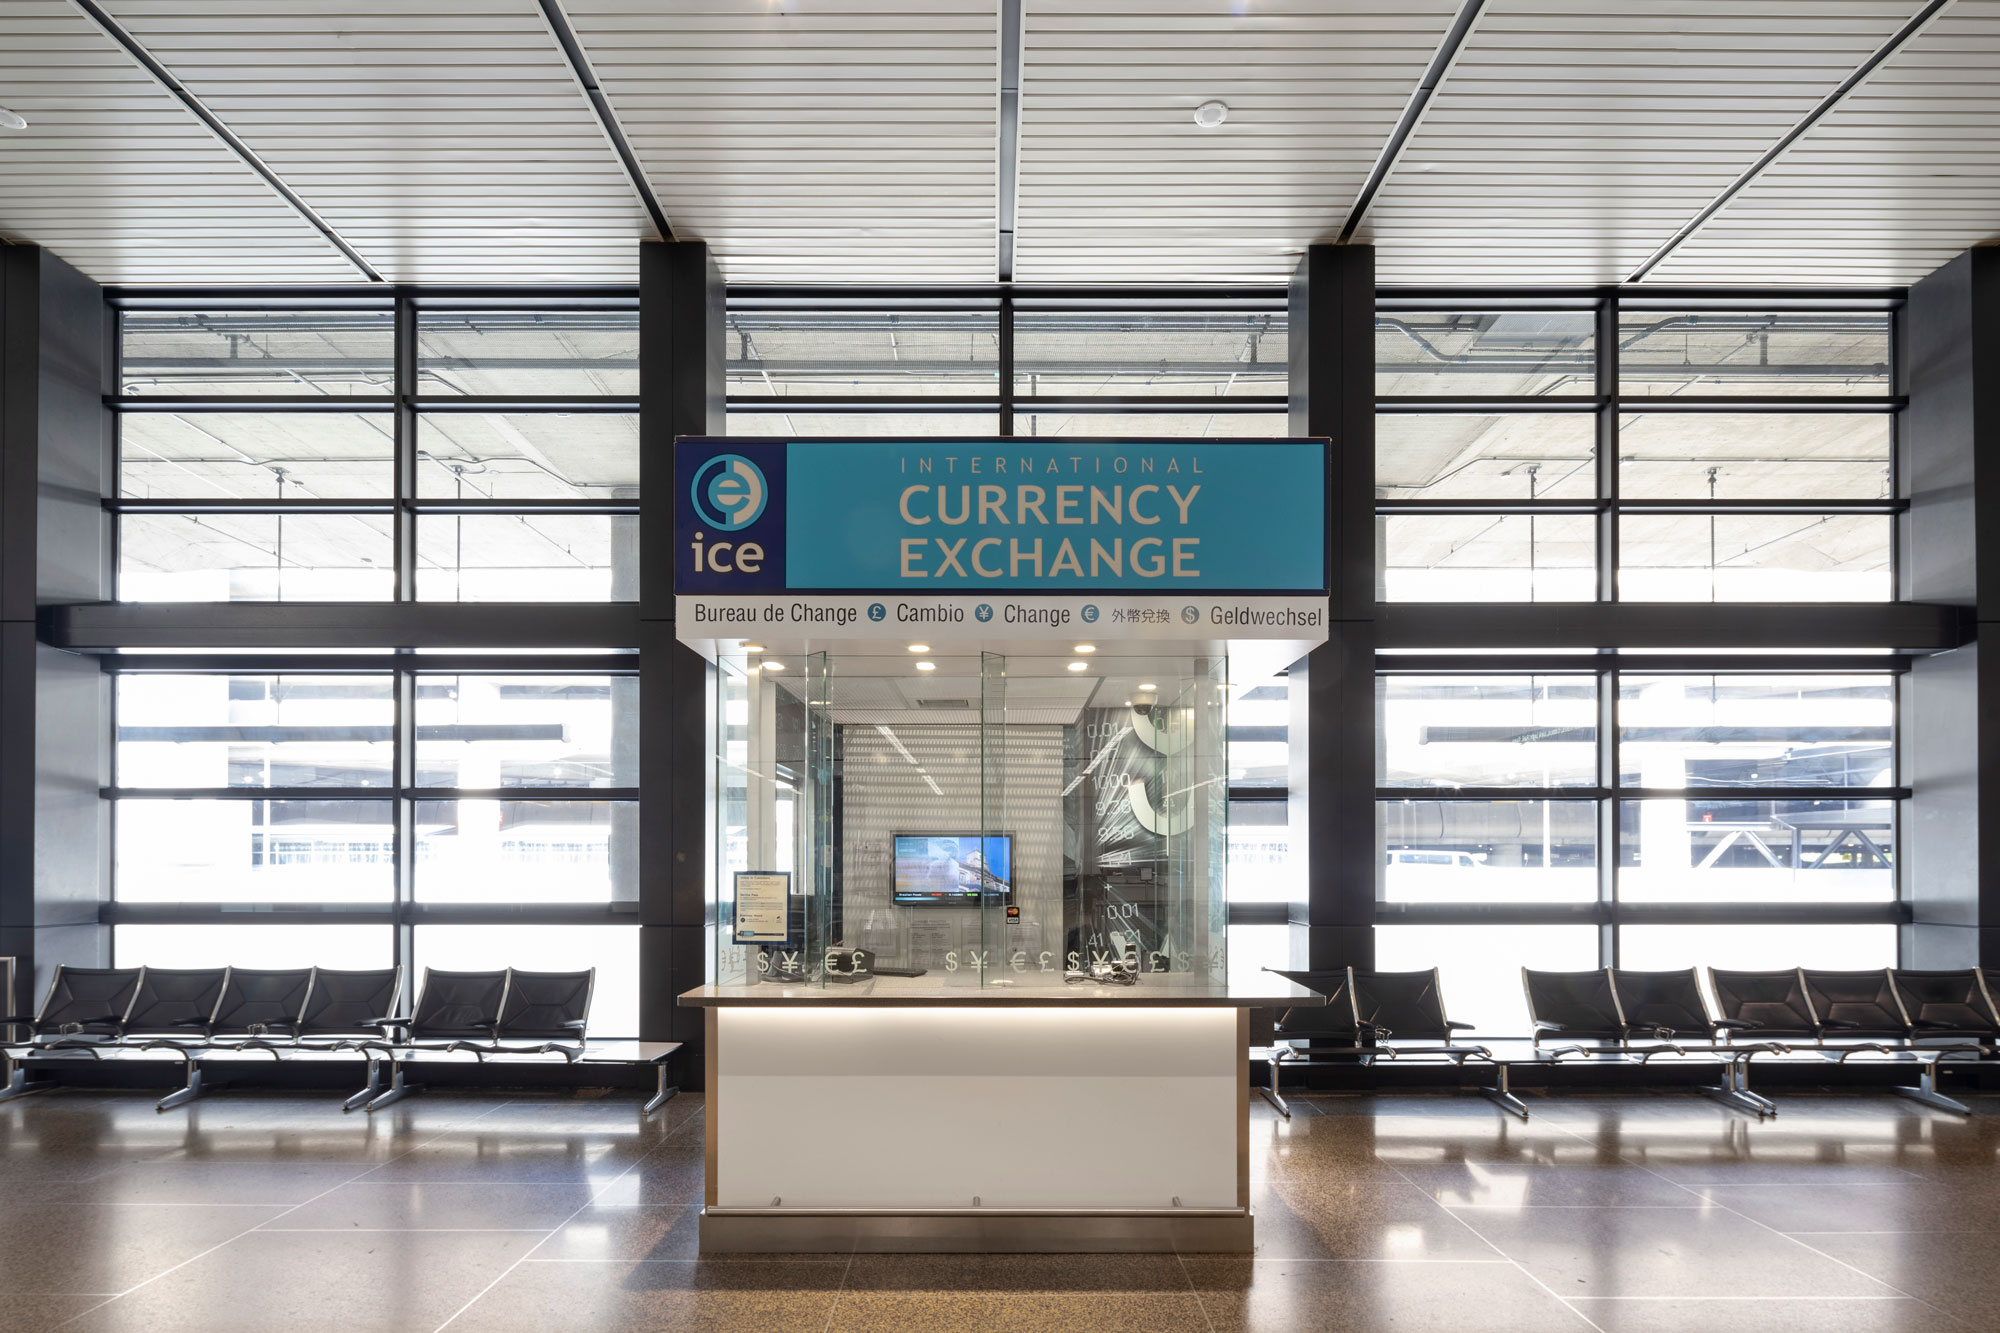 SEA International Currency Exchange Kiosk Near Baggage Claim